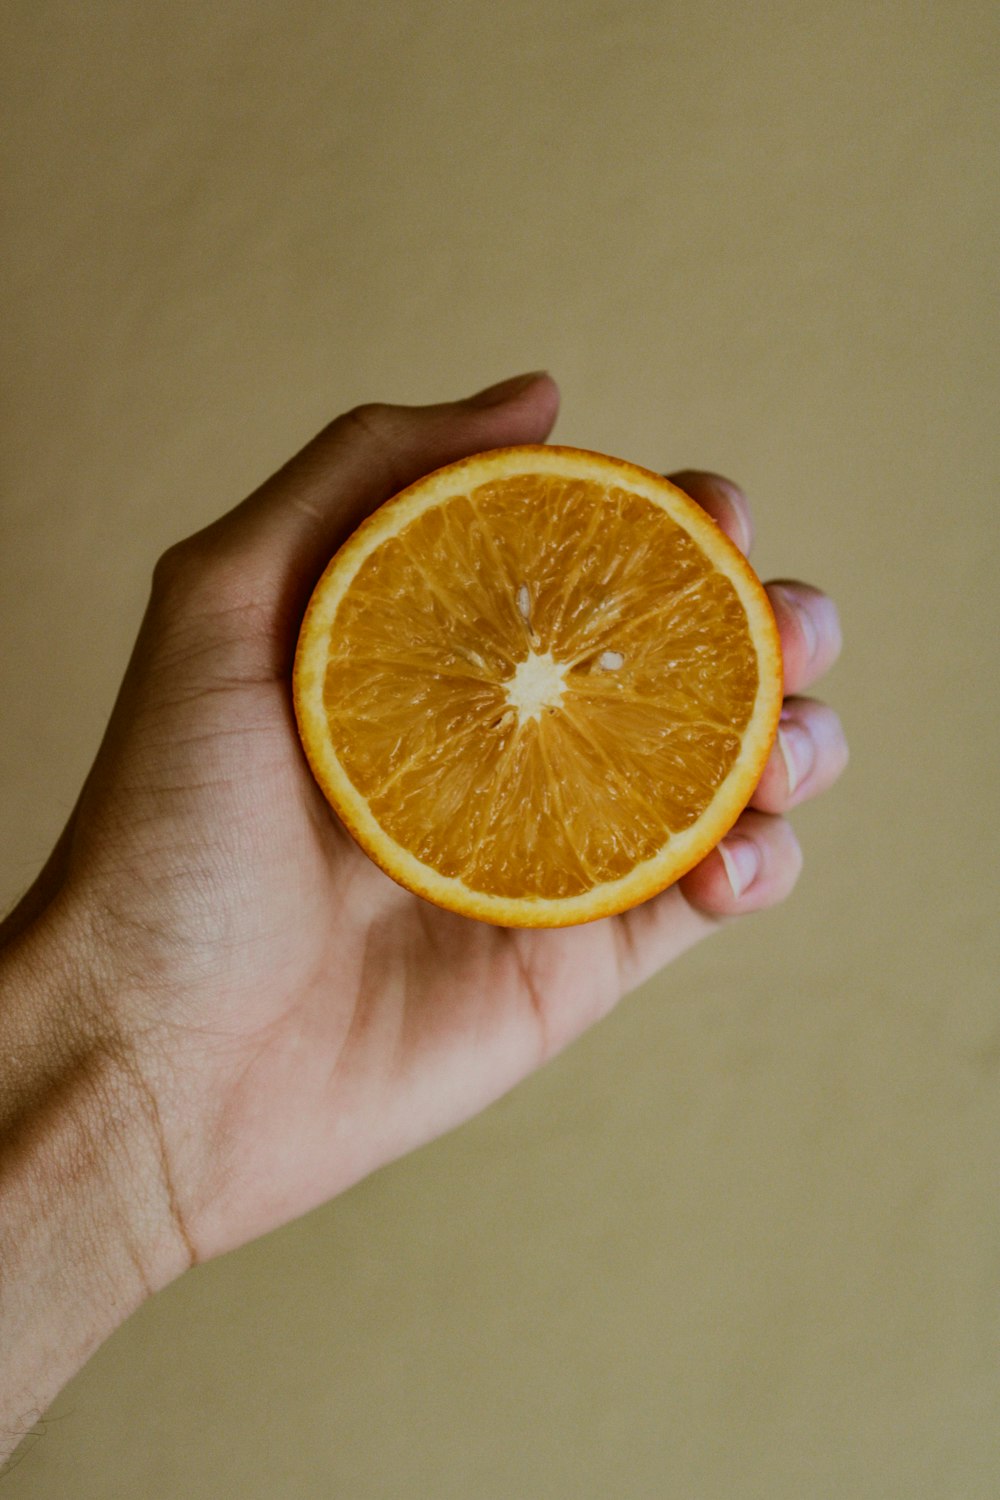 slice of orange fruit